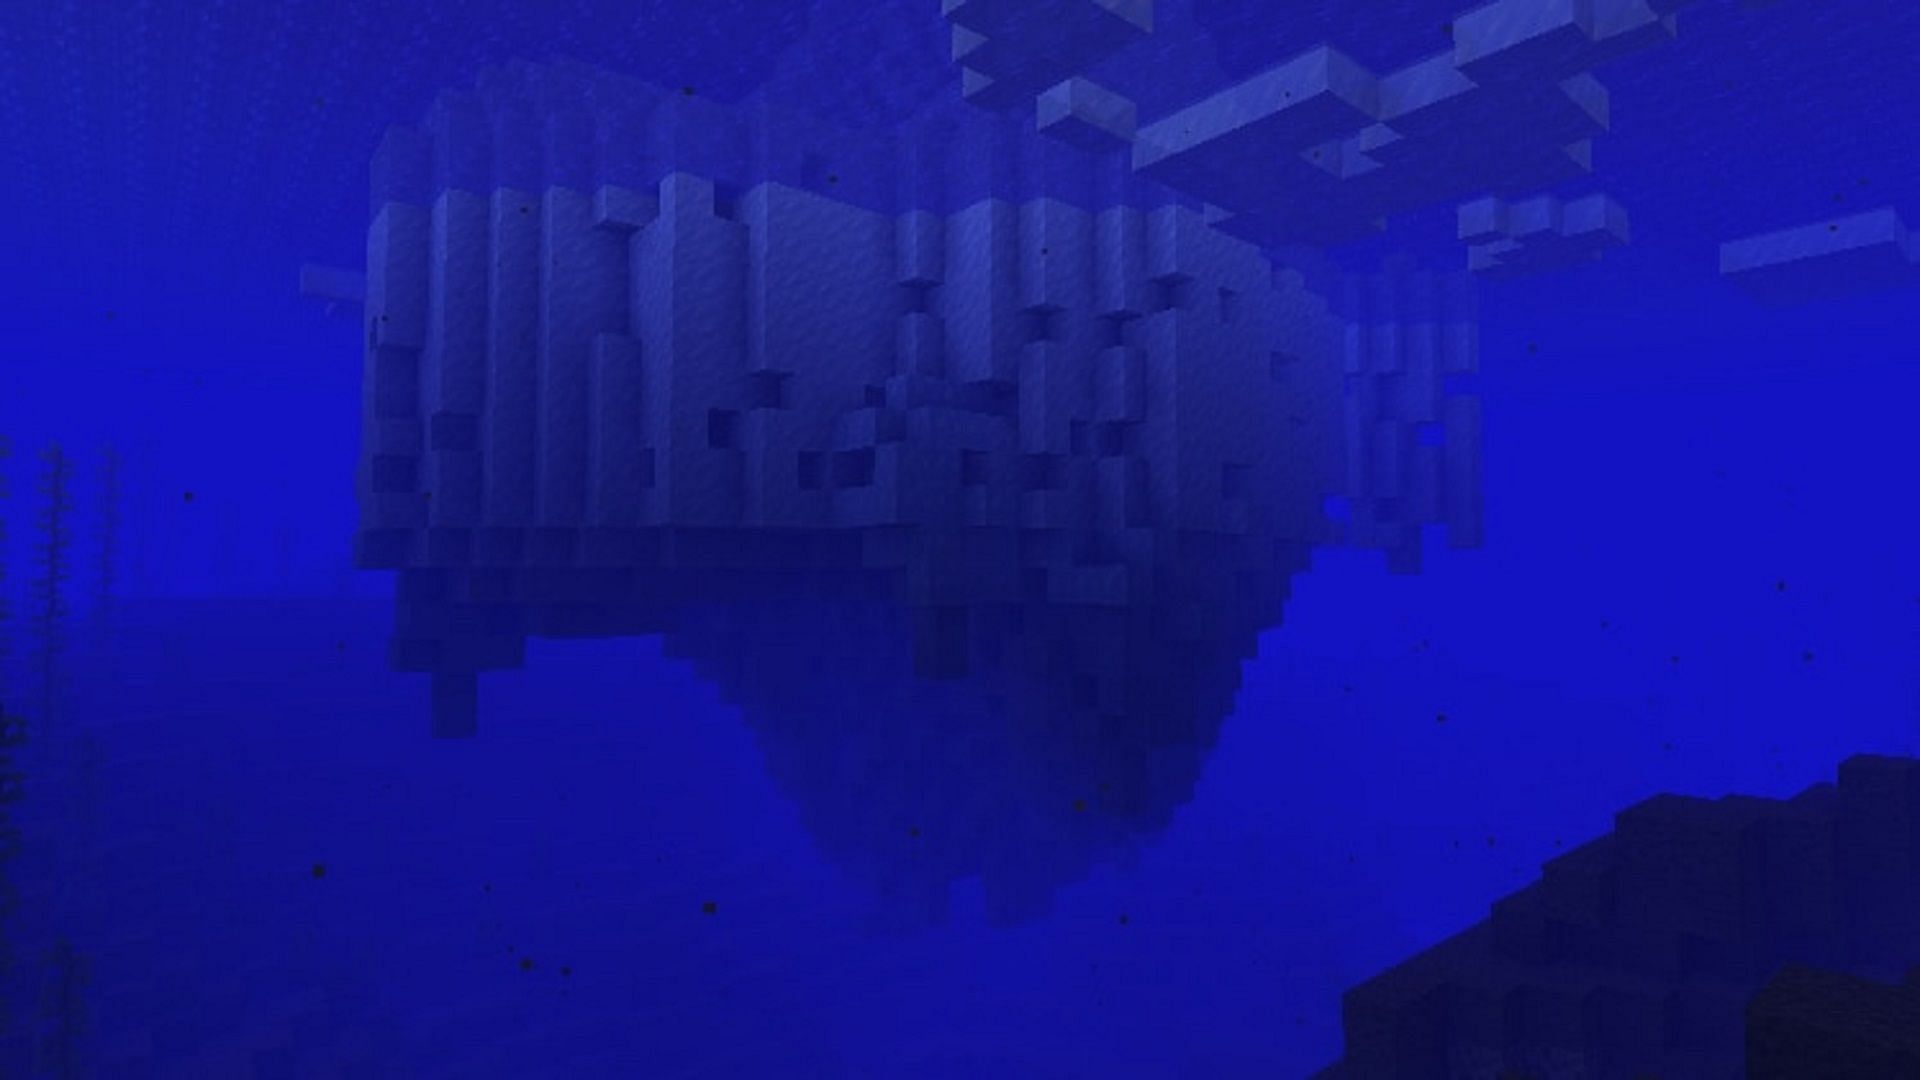 A large glacier in a deep frozen ocean (Image via Minecraft.net)